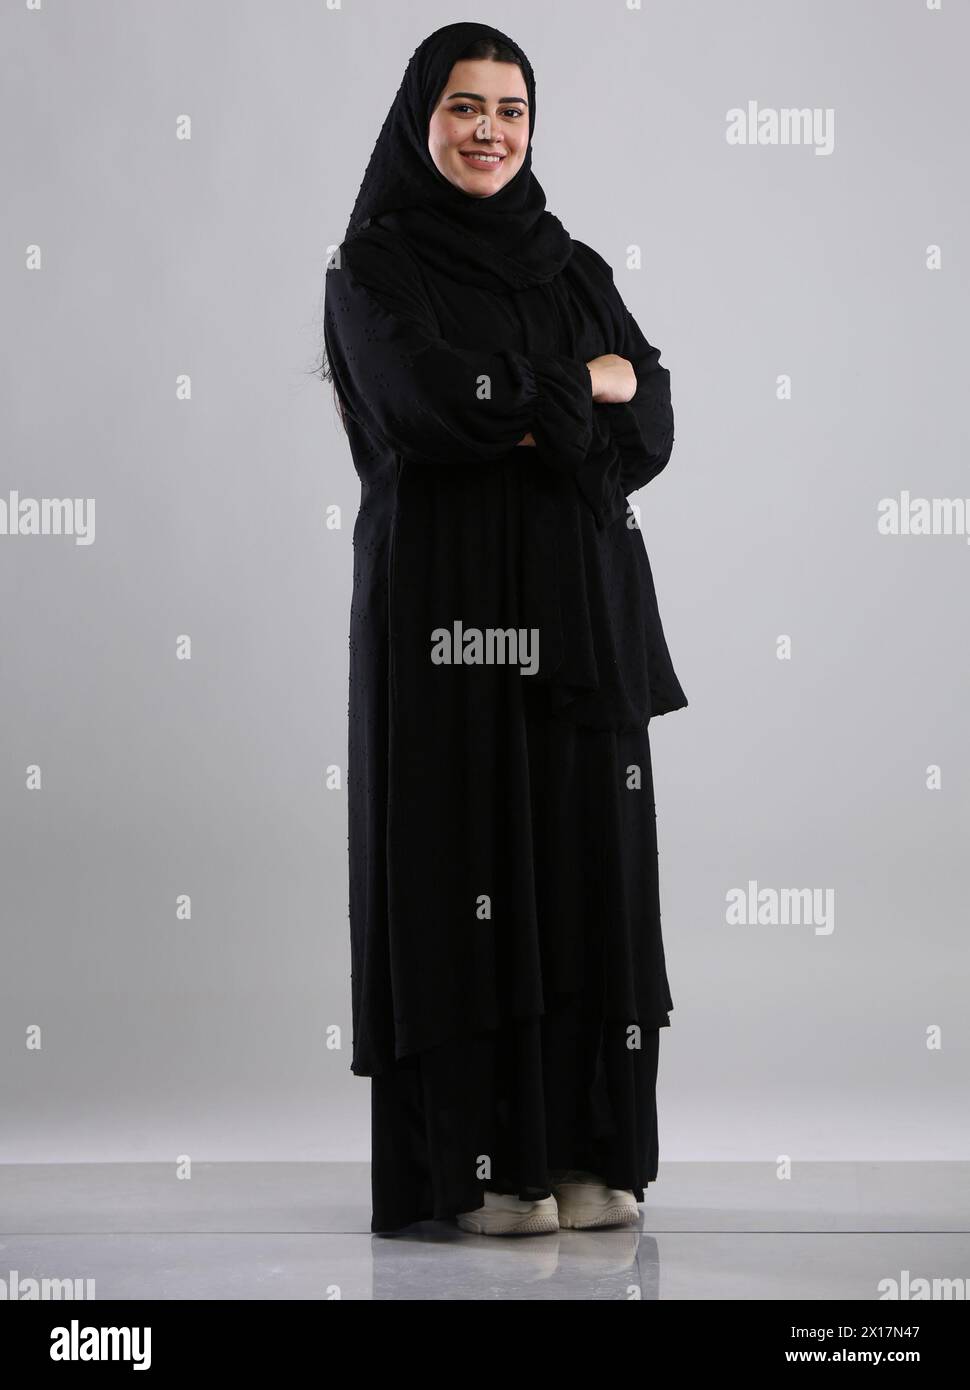 saudi arabian woman lady standing wearing hijaab looking infront side view smiling Stock Photo